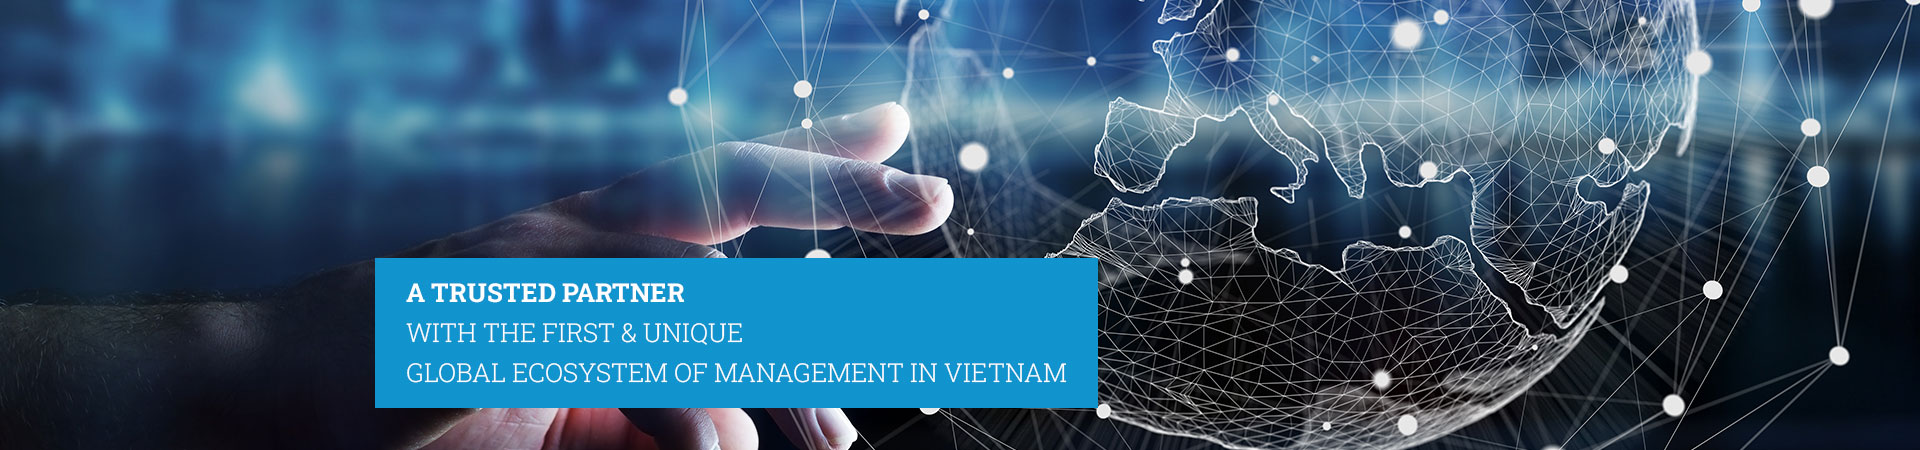 Global ecosystem of management in Vietnam